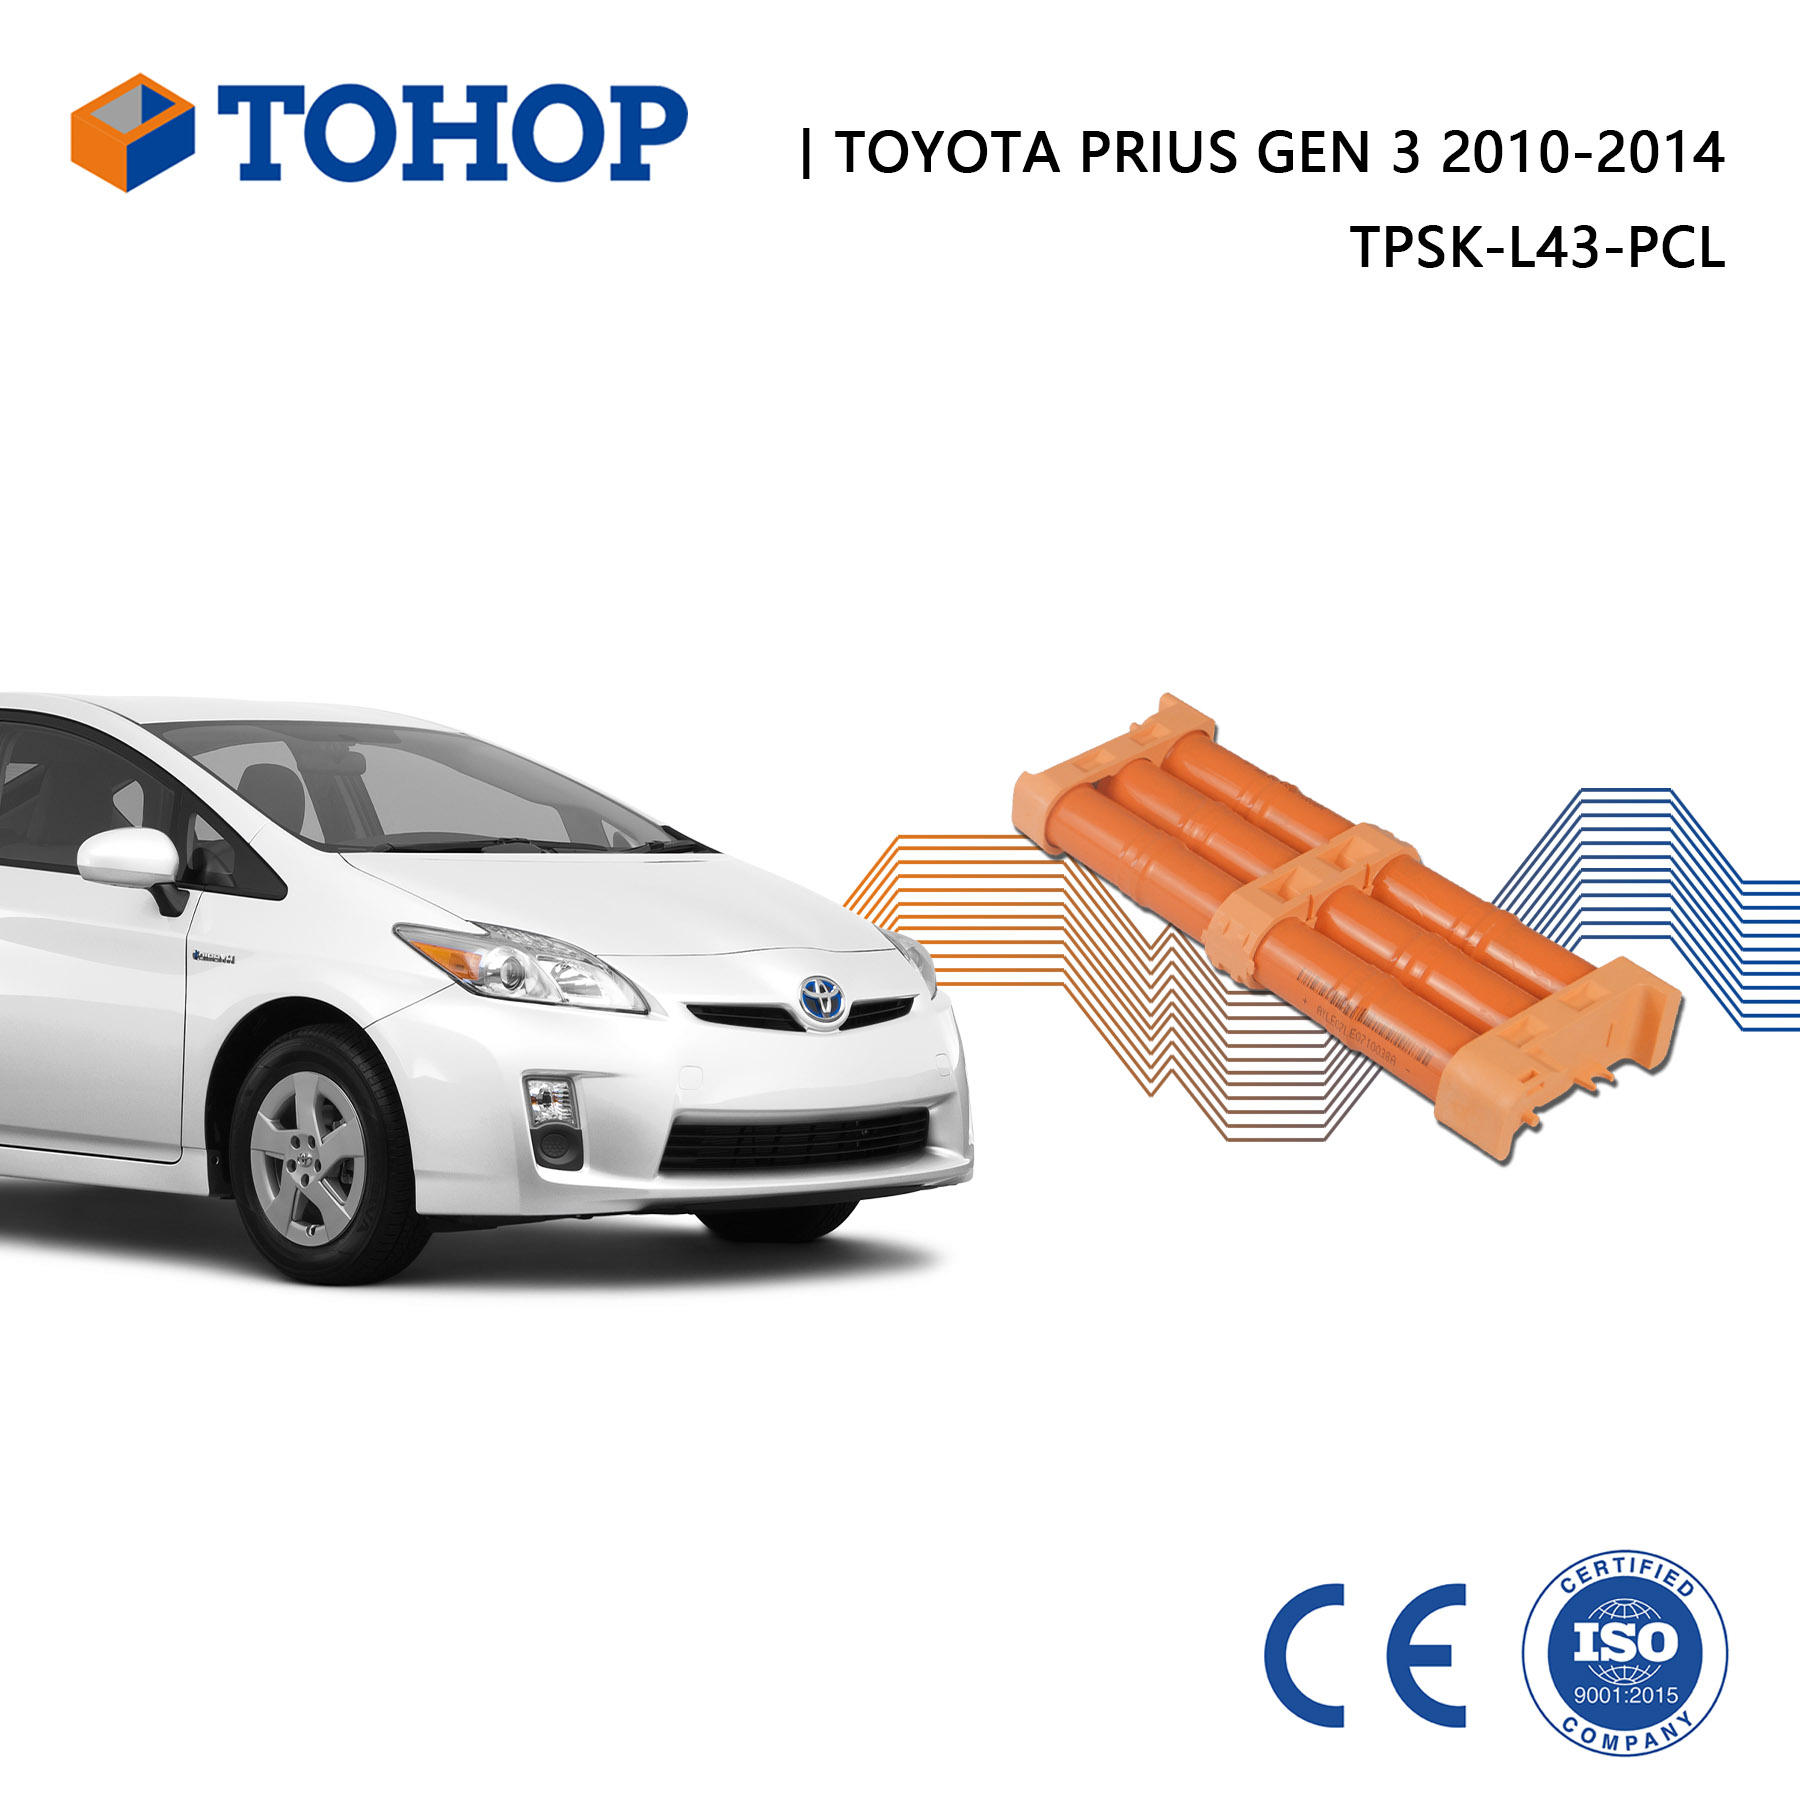 Brand New Prius Gen 3 2014 Hybrid Car Battery for Toyota